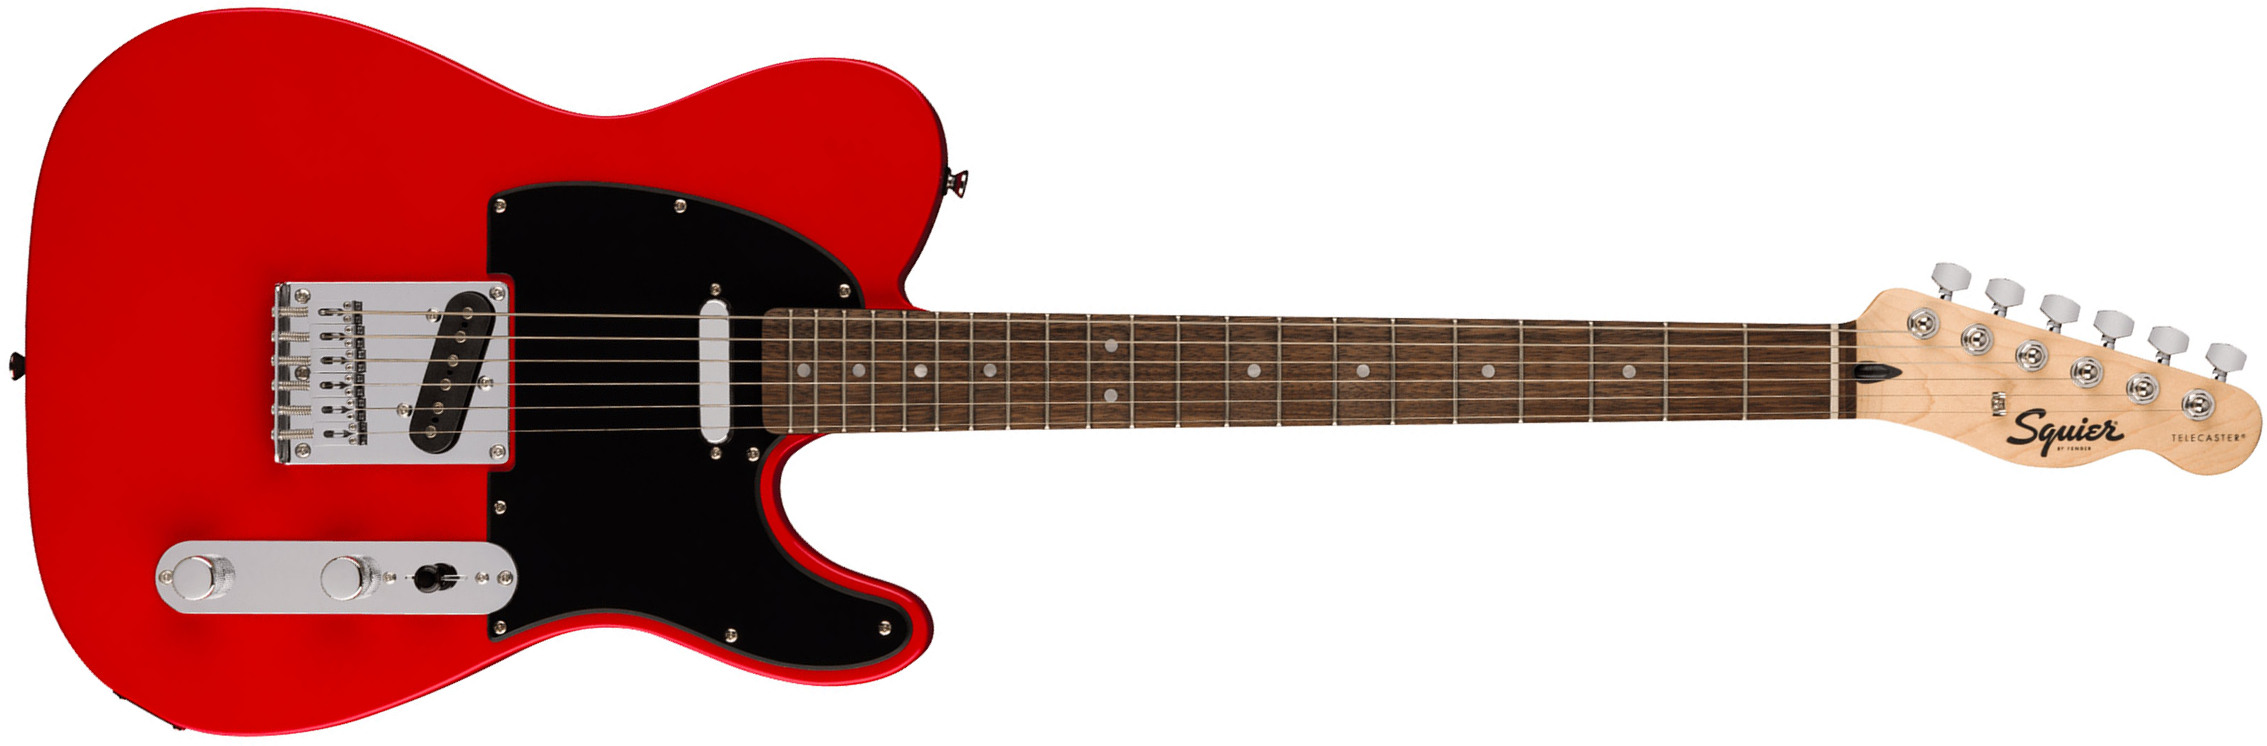 Squier Tele Sonic 2s Ht Lau - Torino Red - Tel shape electric guitar - Main picture